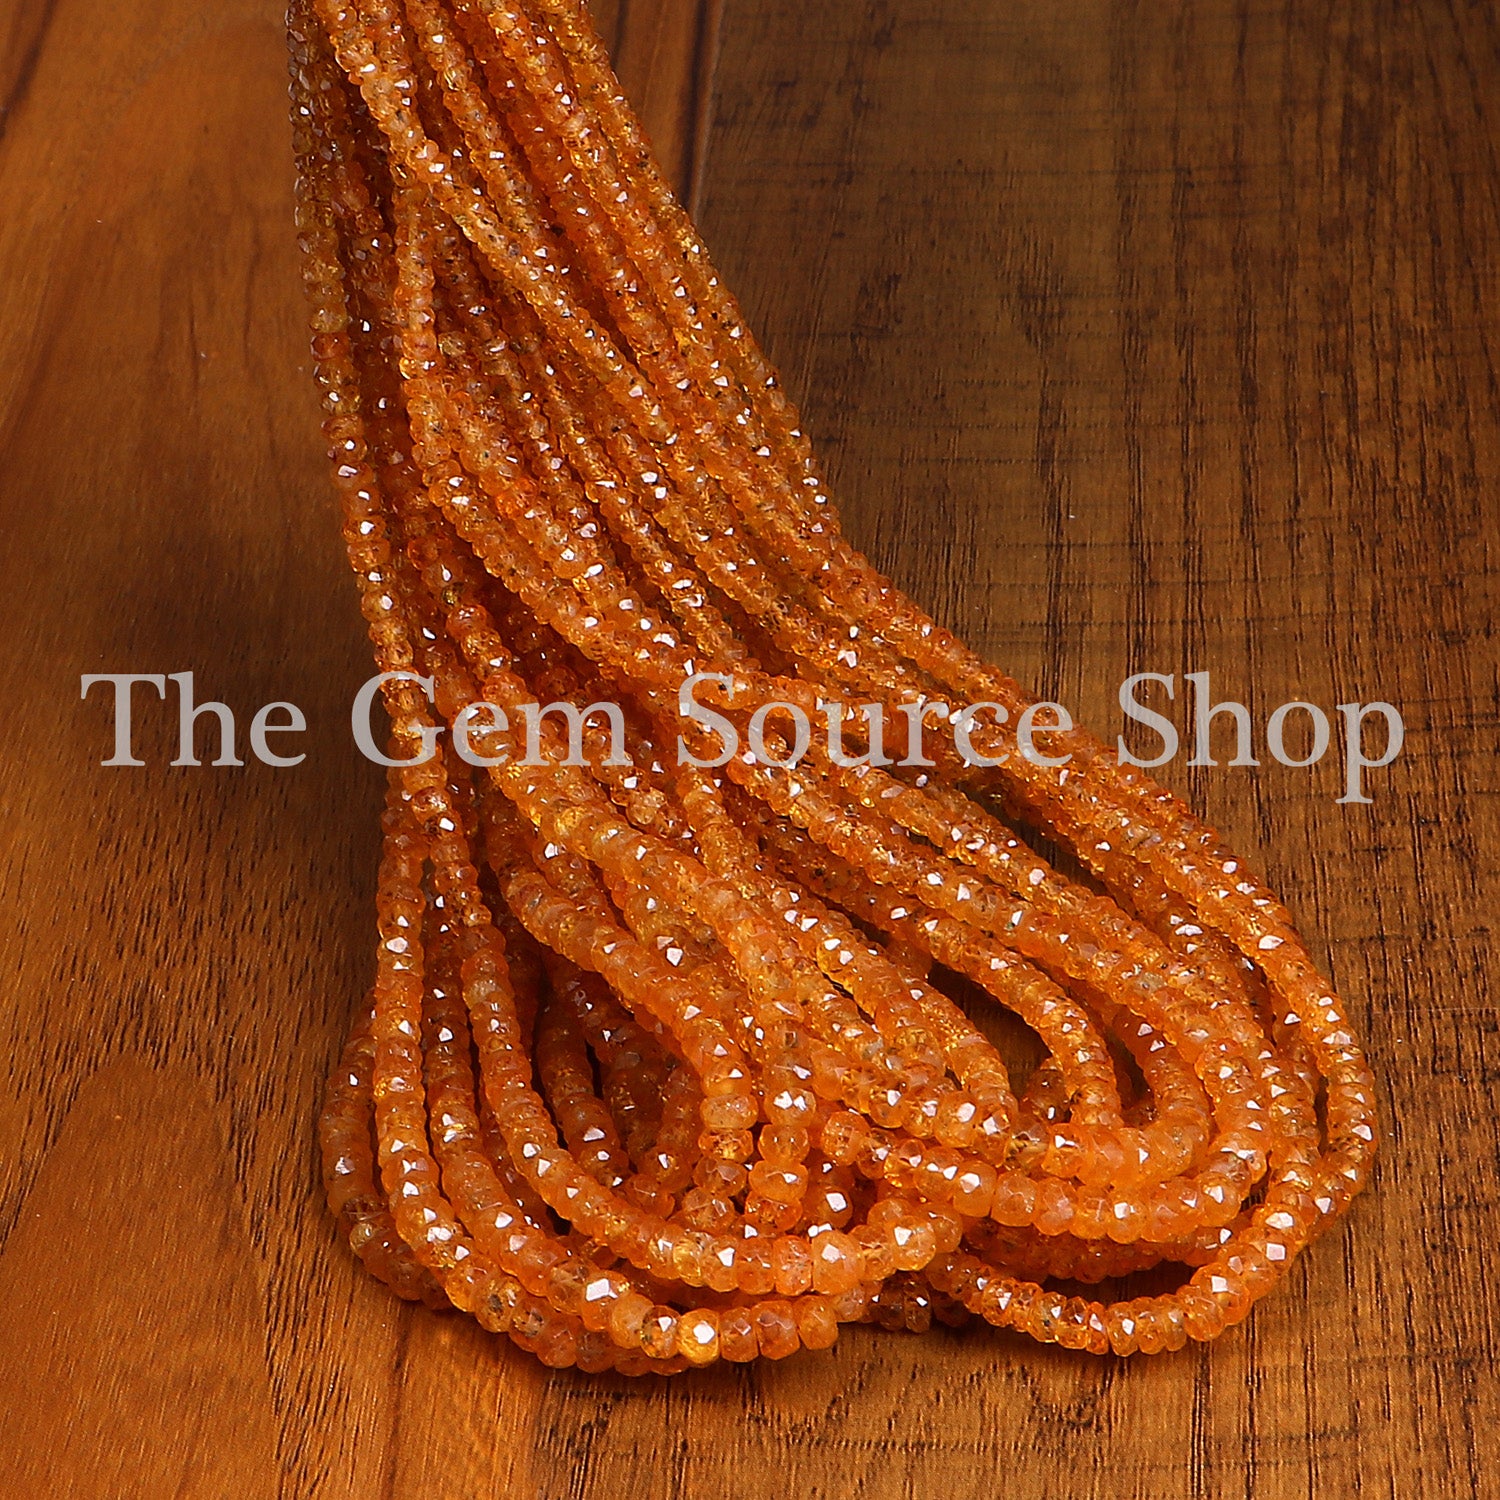 Spessartine Garnet Beads, Garnet Faceted Beads, Garnet Rondelle Shape Beads, Beads Manufacturing